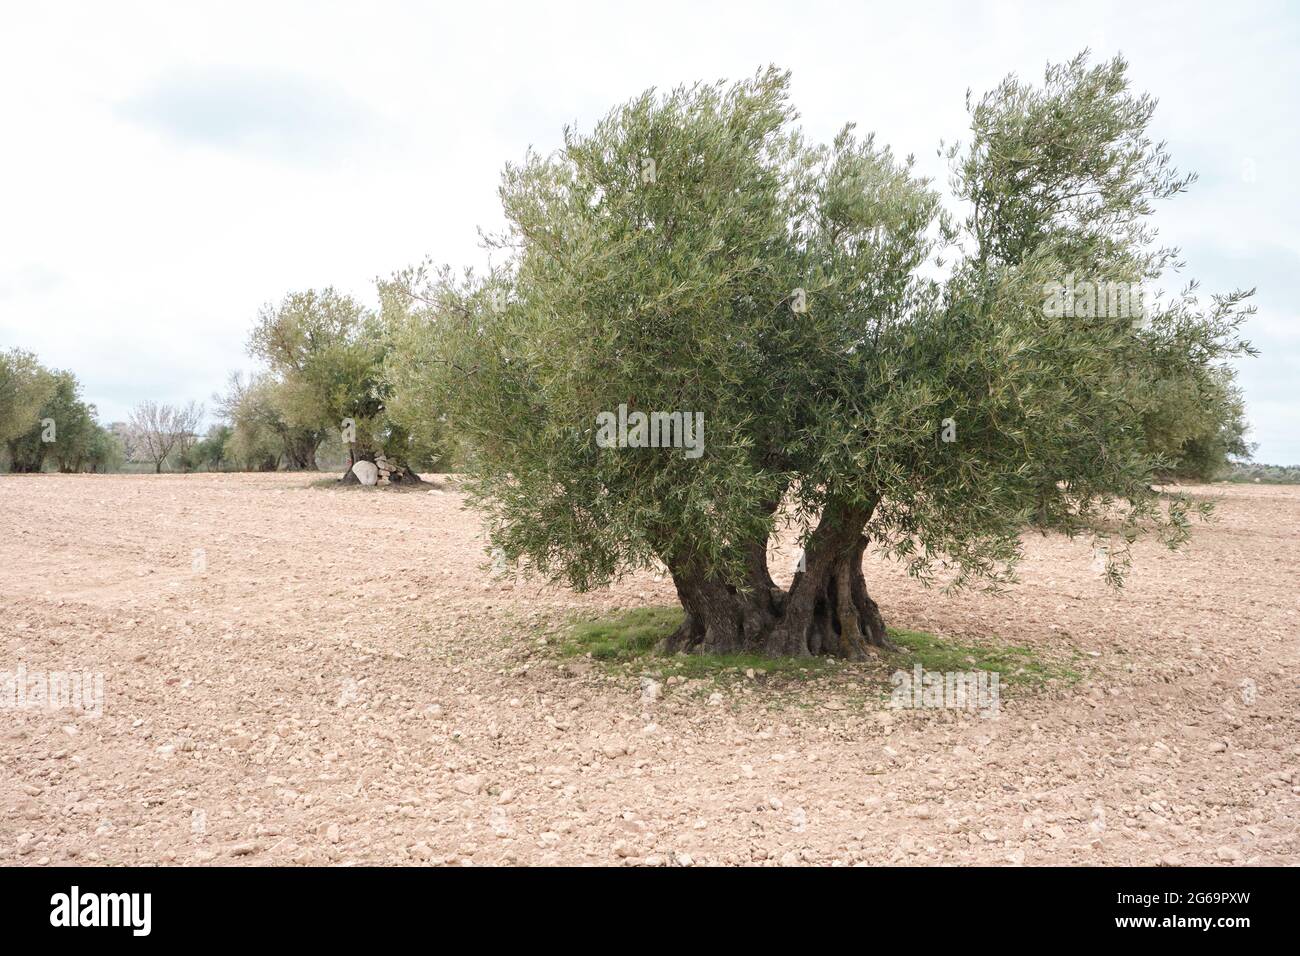 Olea europaea or olive trees field in Spain Stock Photo